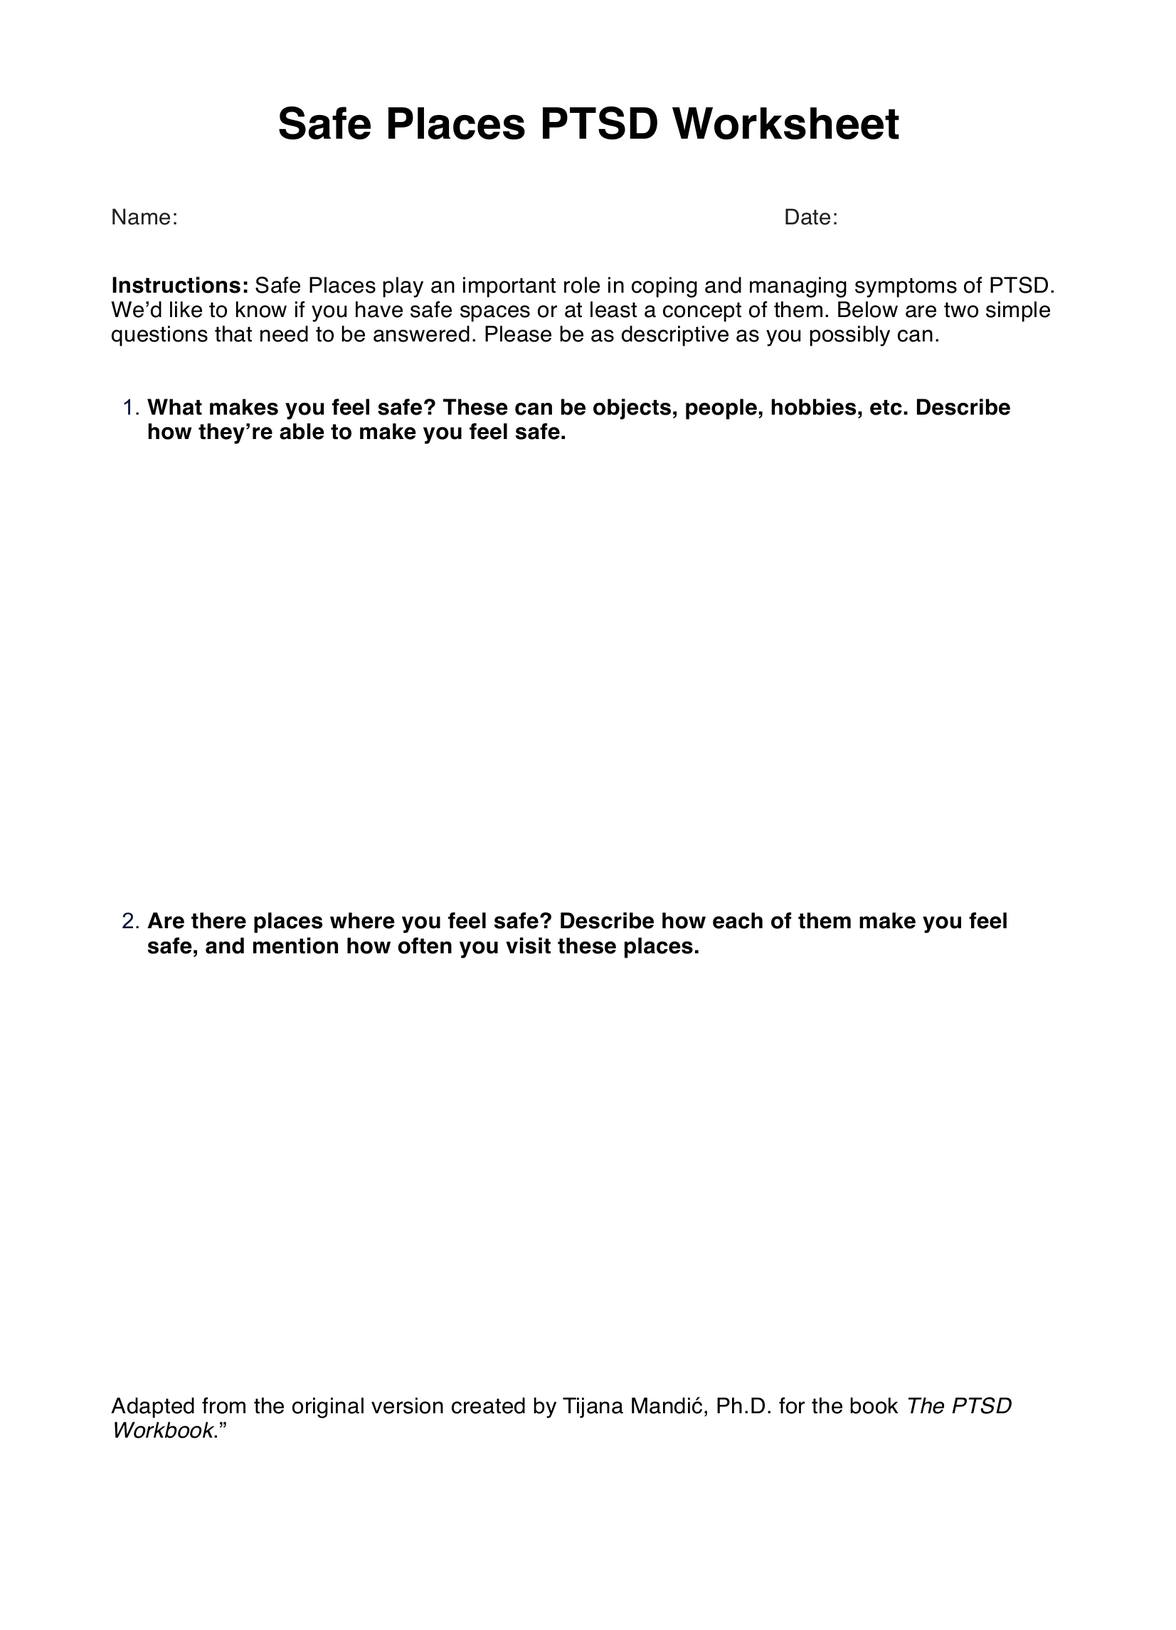 Safe Places PTSD Worksheet PDF Example